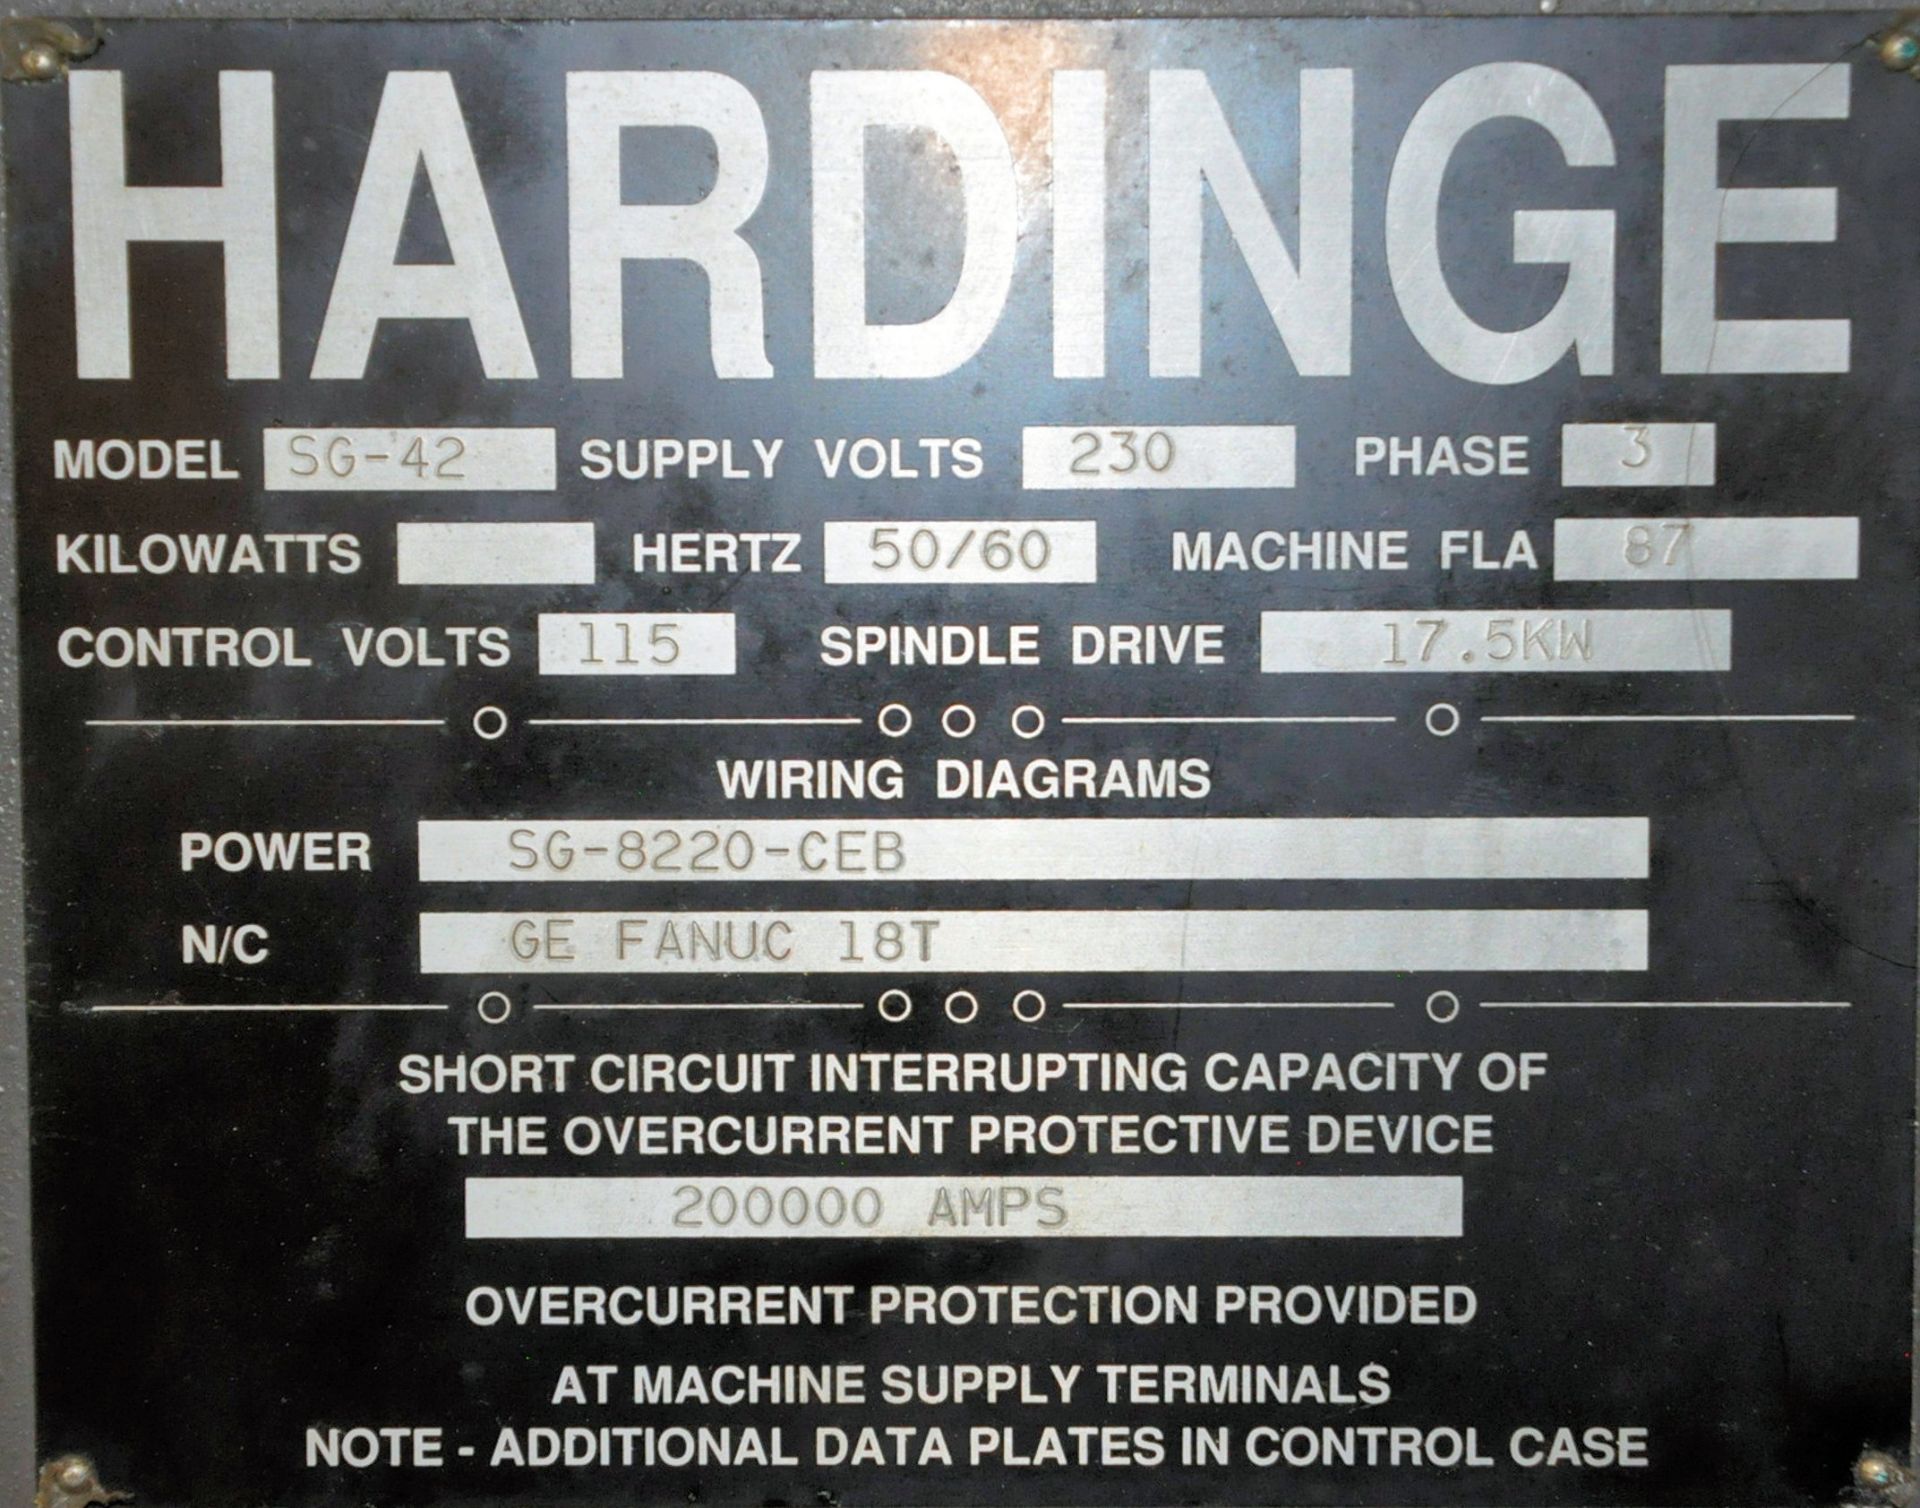 Hardinge Conquest T42 Model SG-42, CNC Turning Center - Image 7 of 8